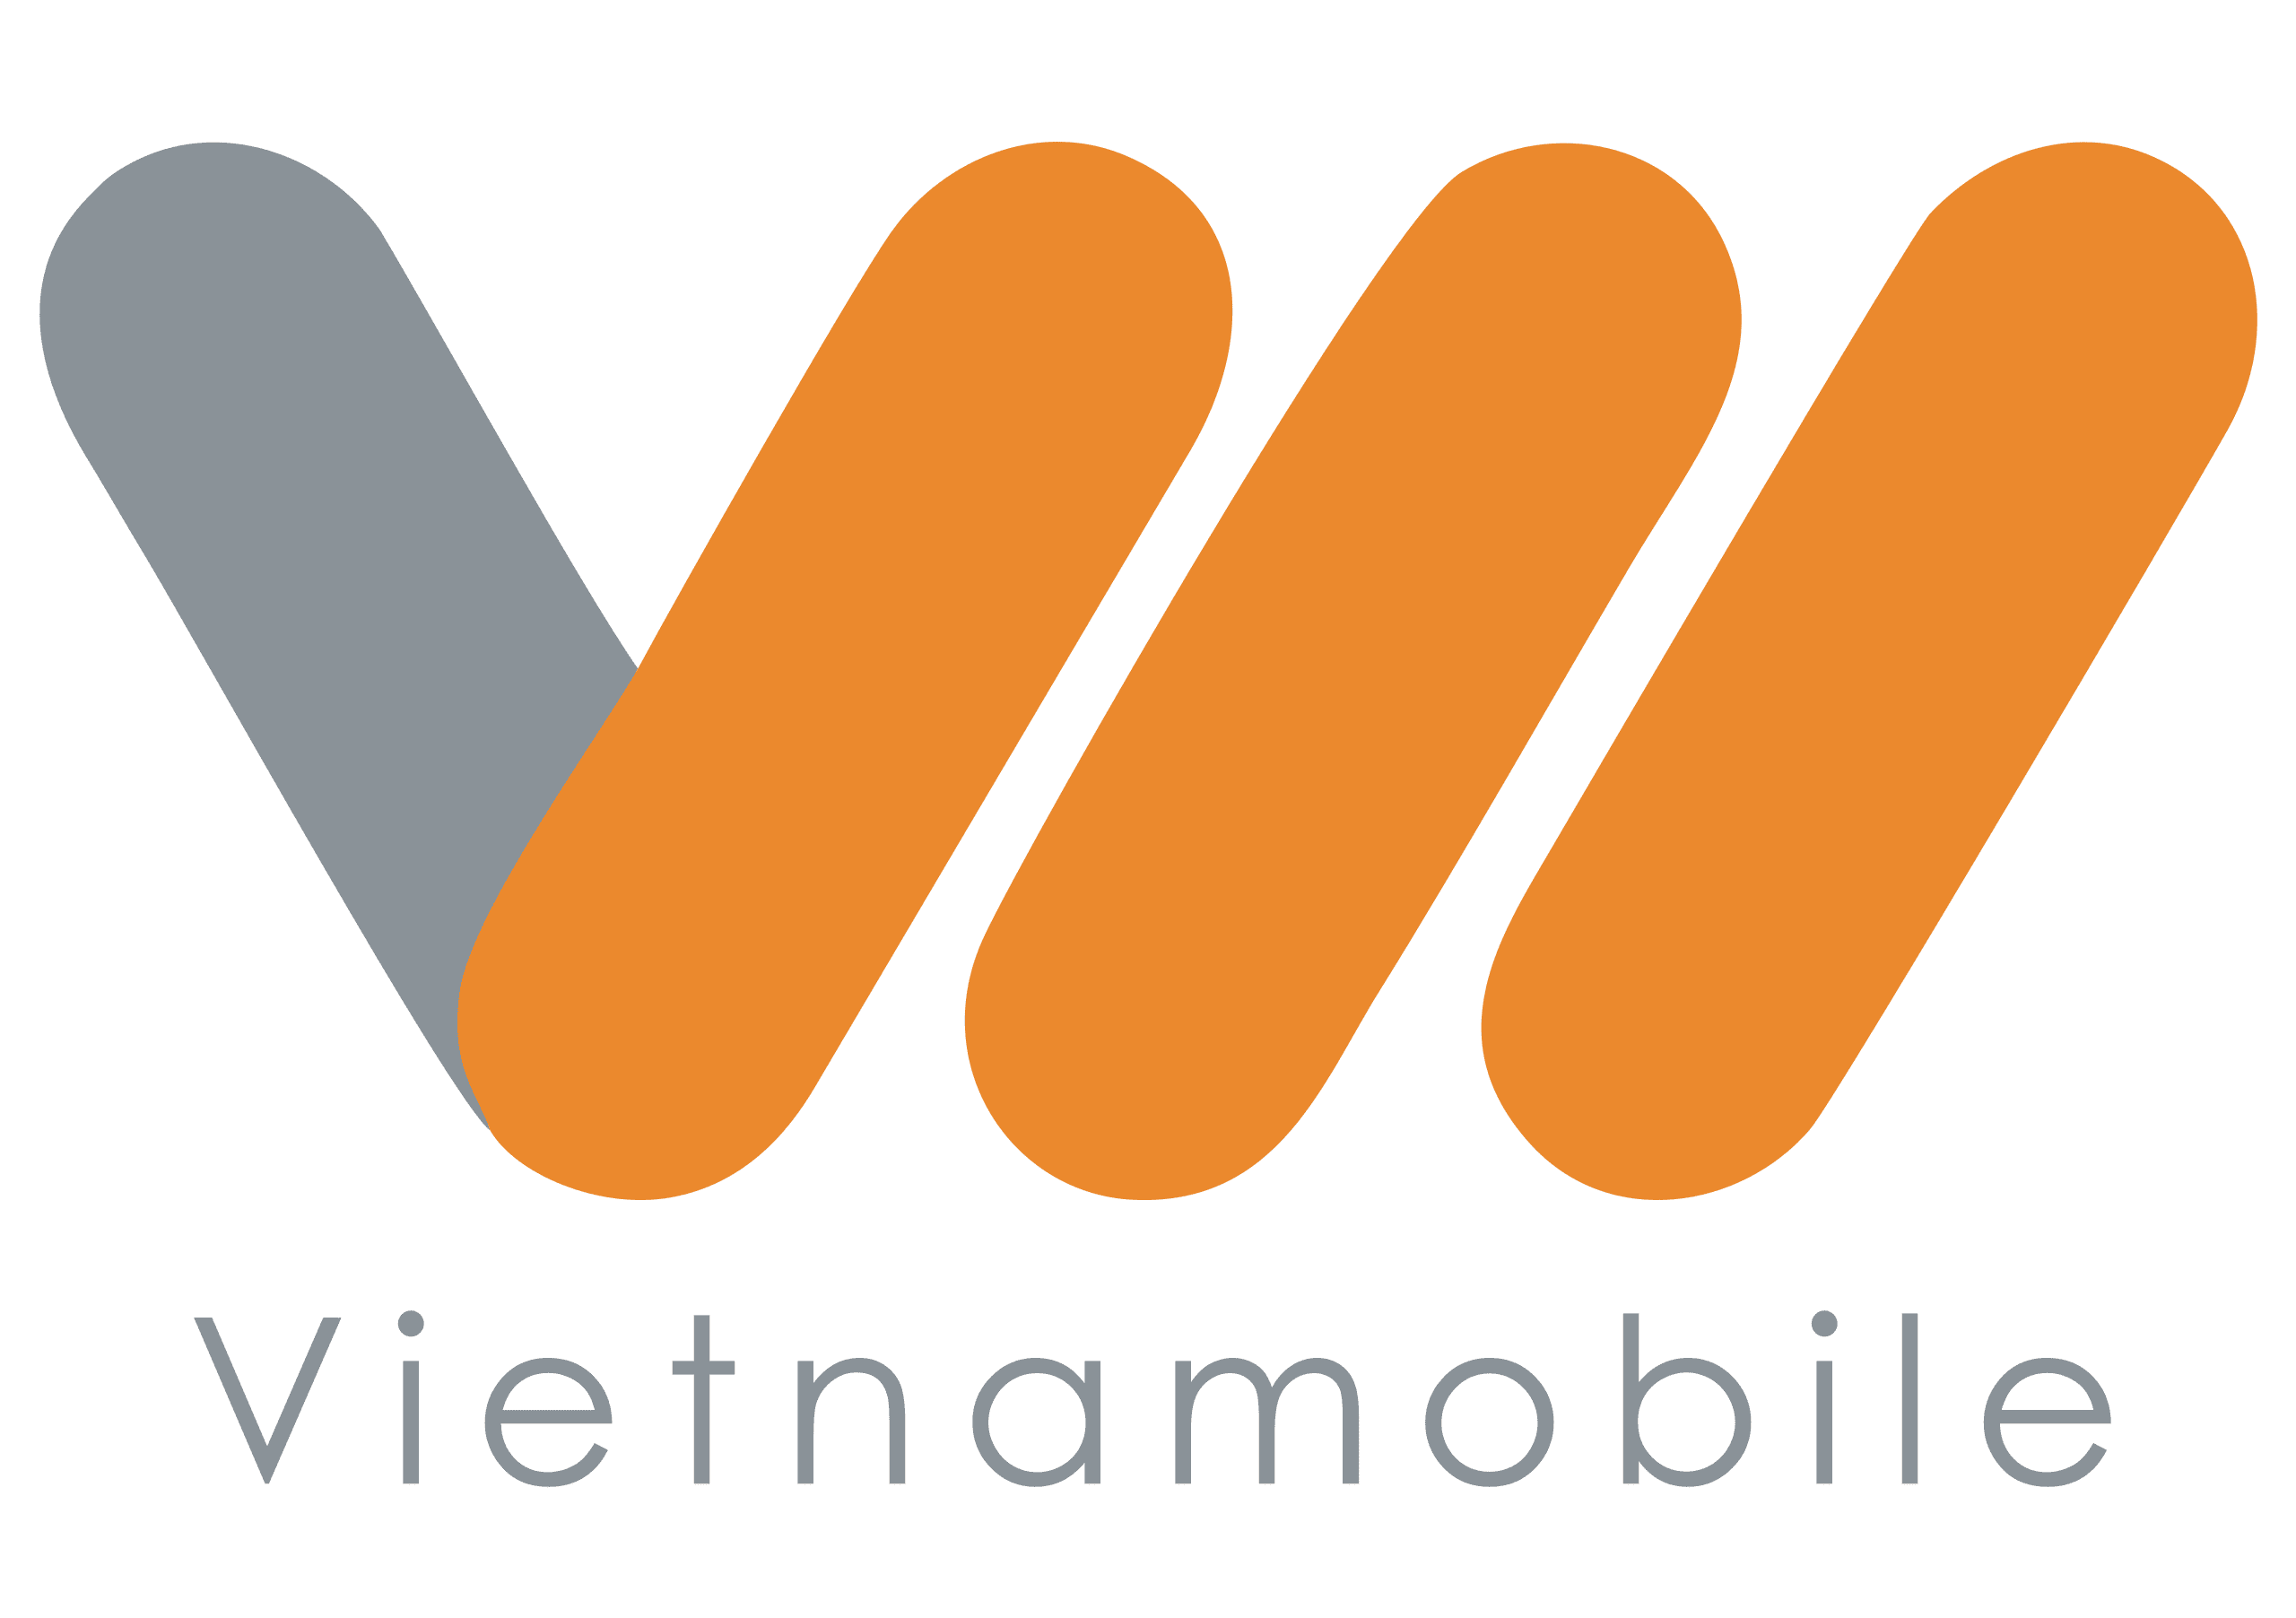 A logo of Mobile Operator - Vietnamobile